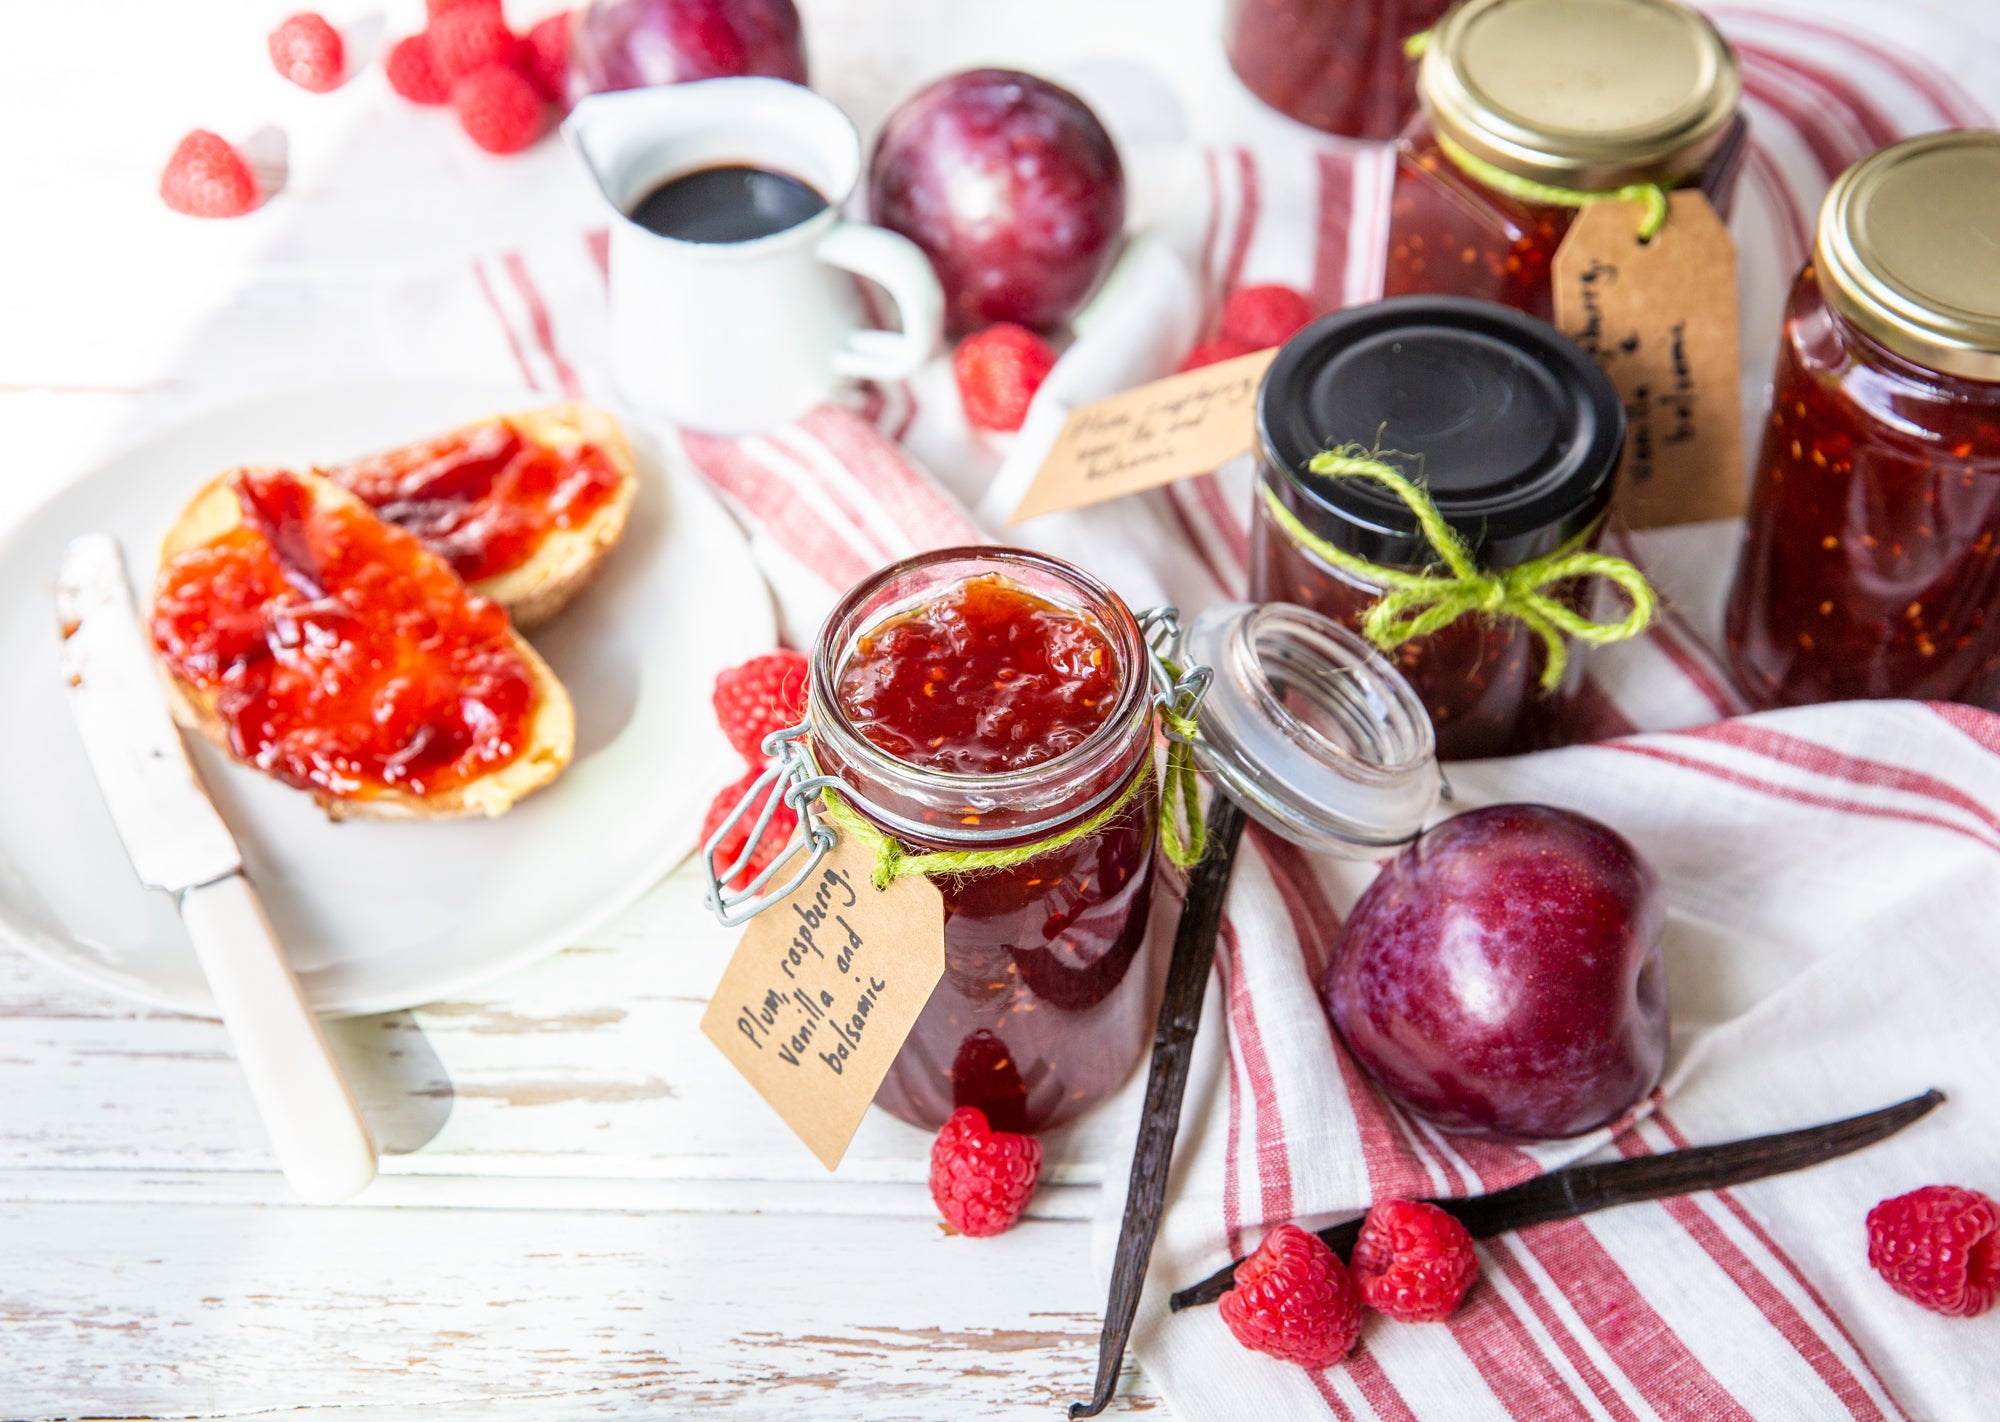 Recipe: Plum, raspberry, vanilla and balsamic jam – The Essential Ingredient